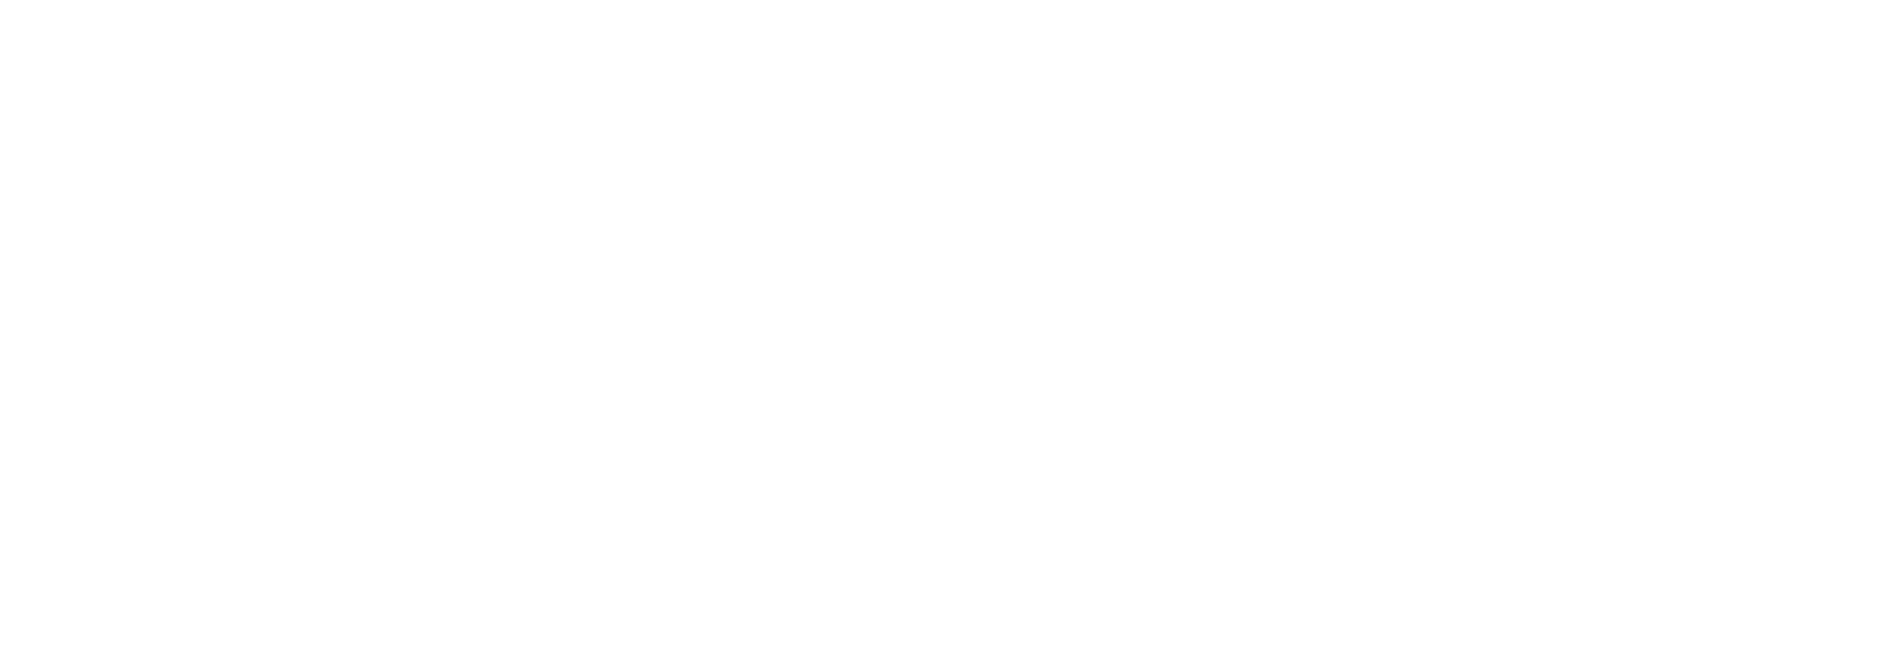 bell starwood logo